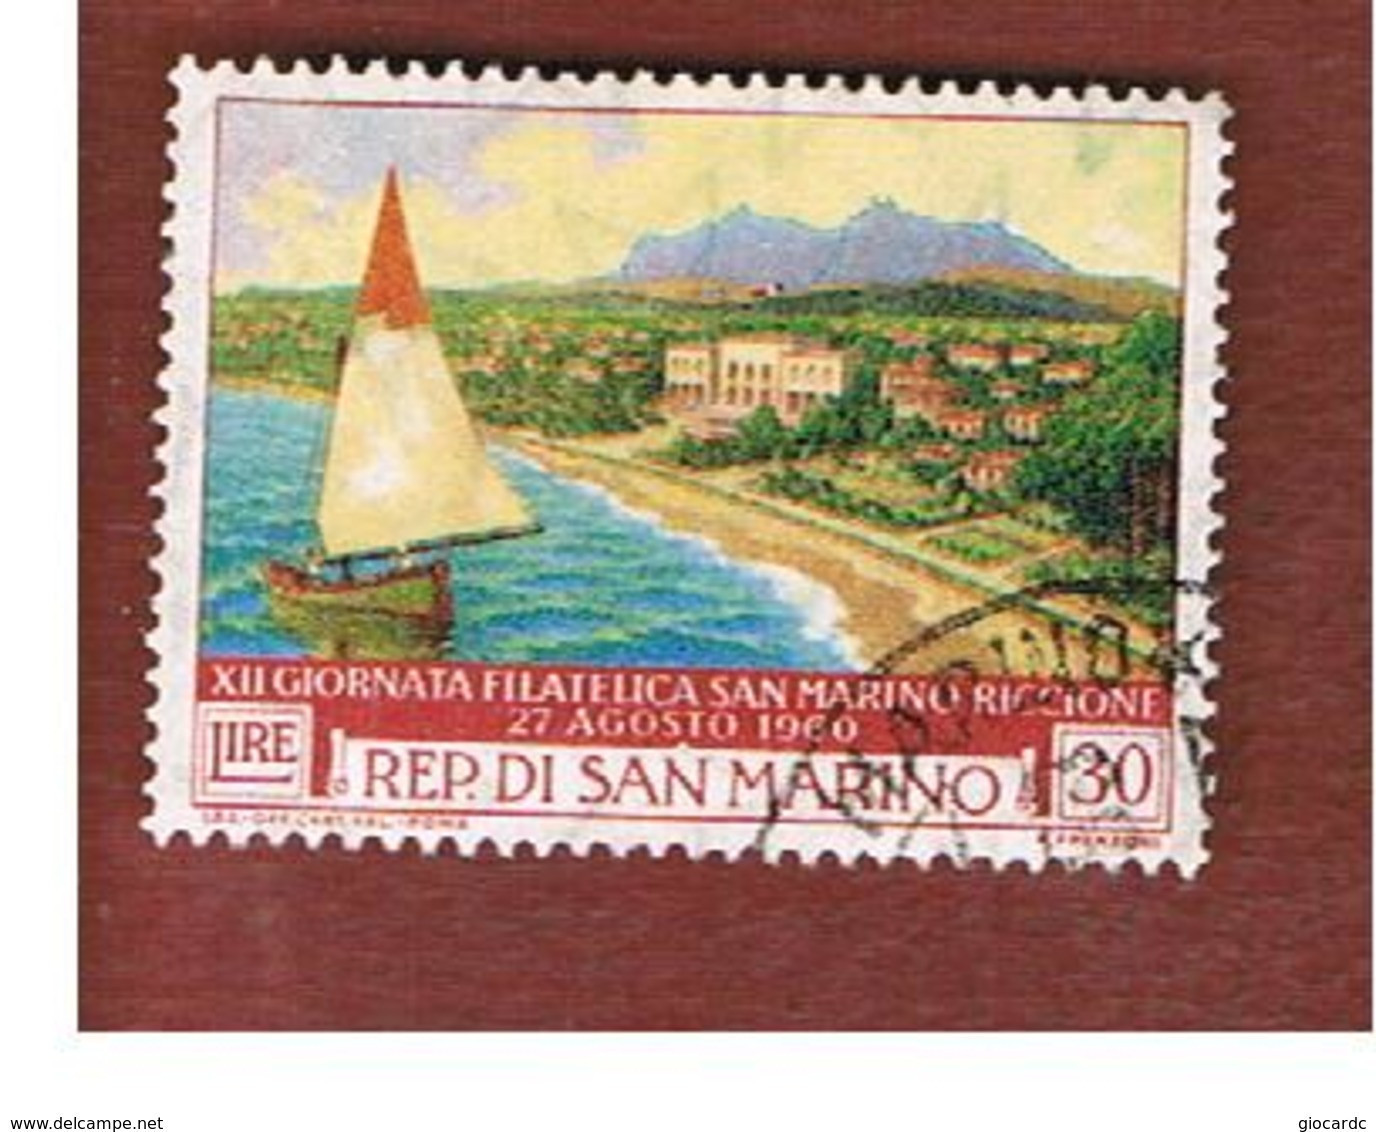 SAN MARINO - UNIF. 535  - 1960 FIERA INT. FILATELICA SAN MARINO-RICCIONE     -  USATI (USED°) - Used Stamps